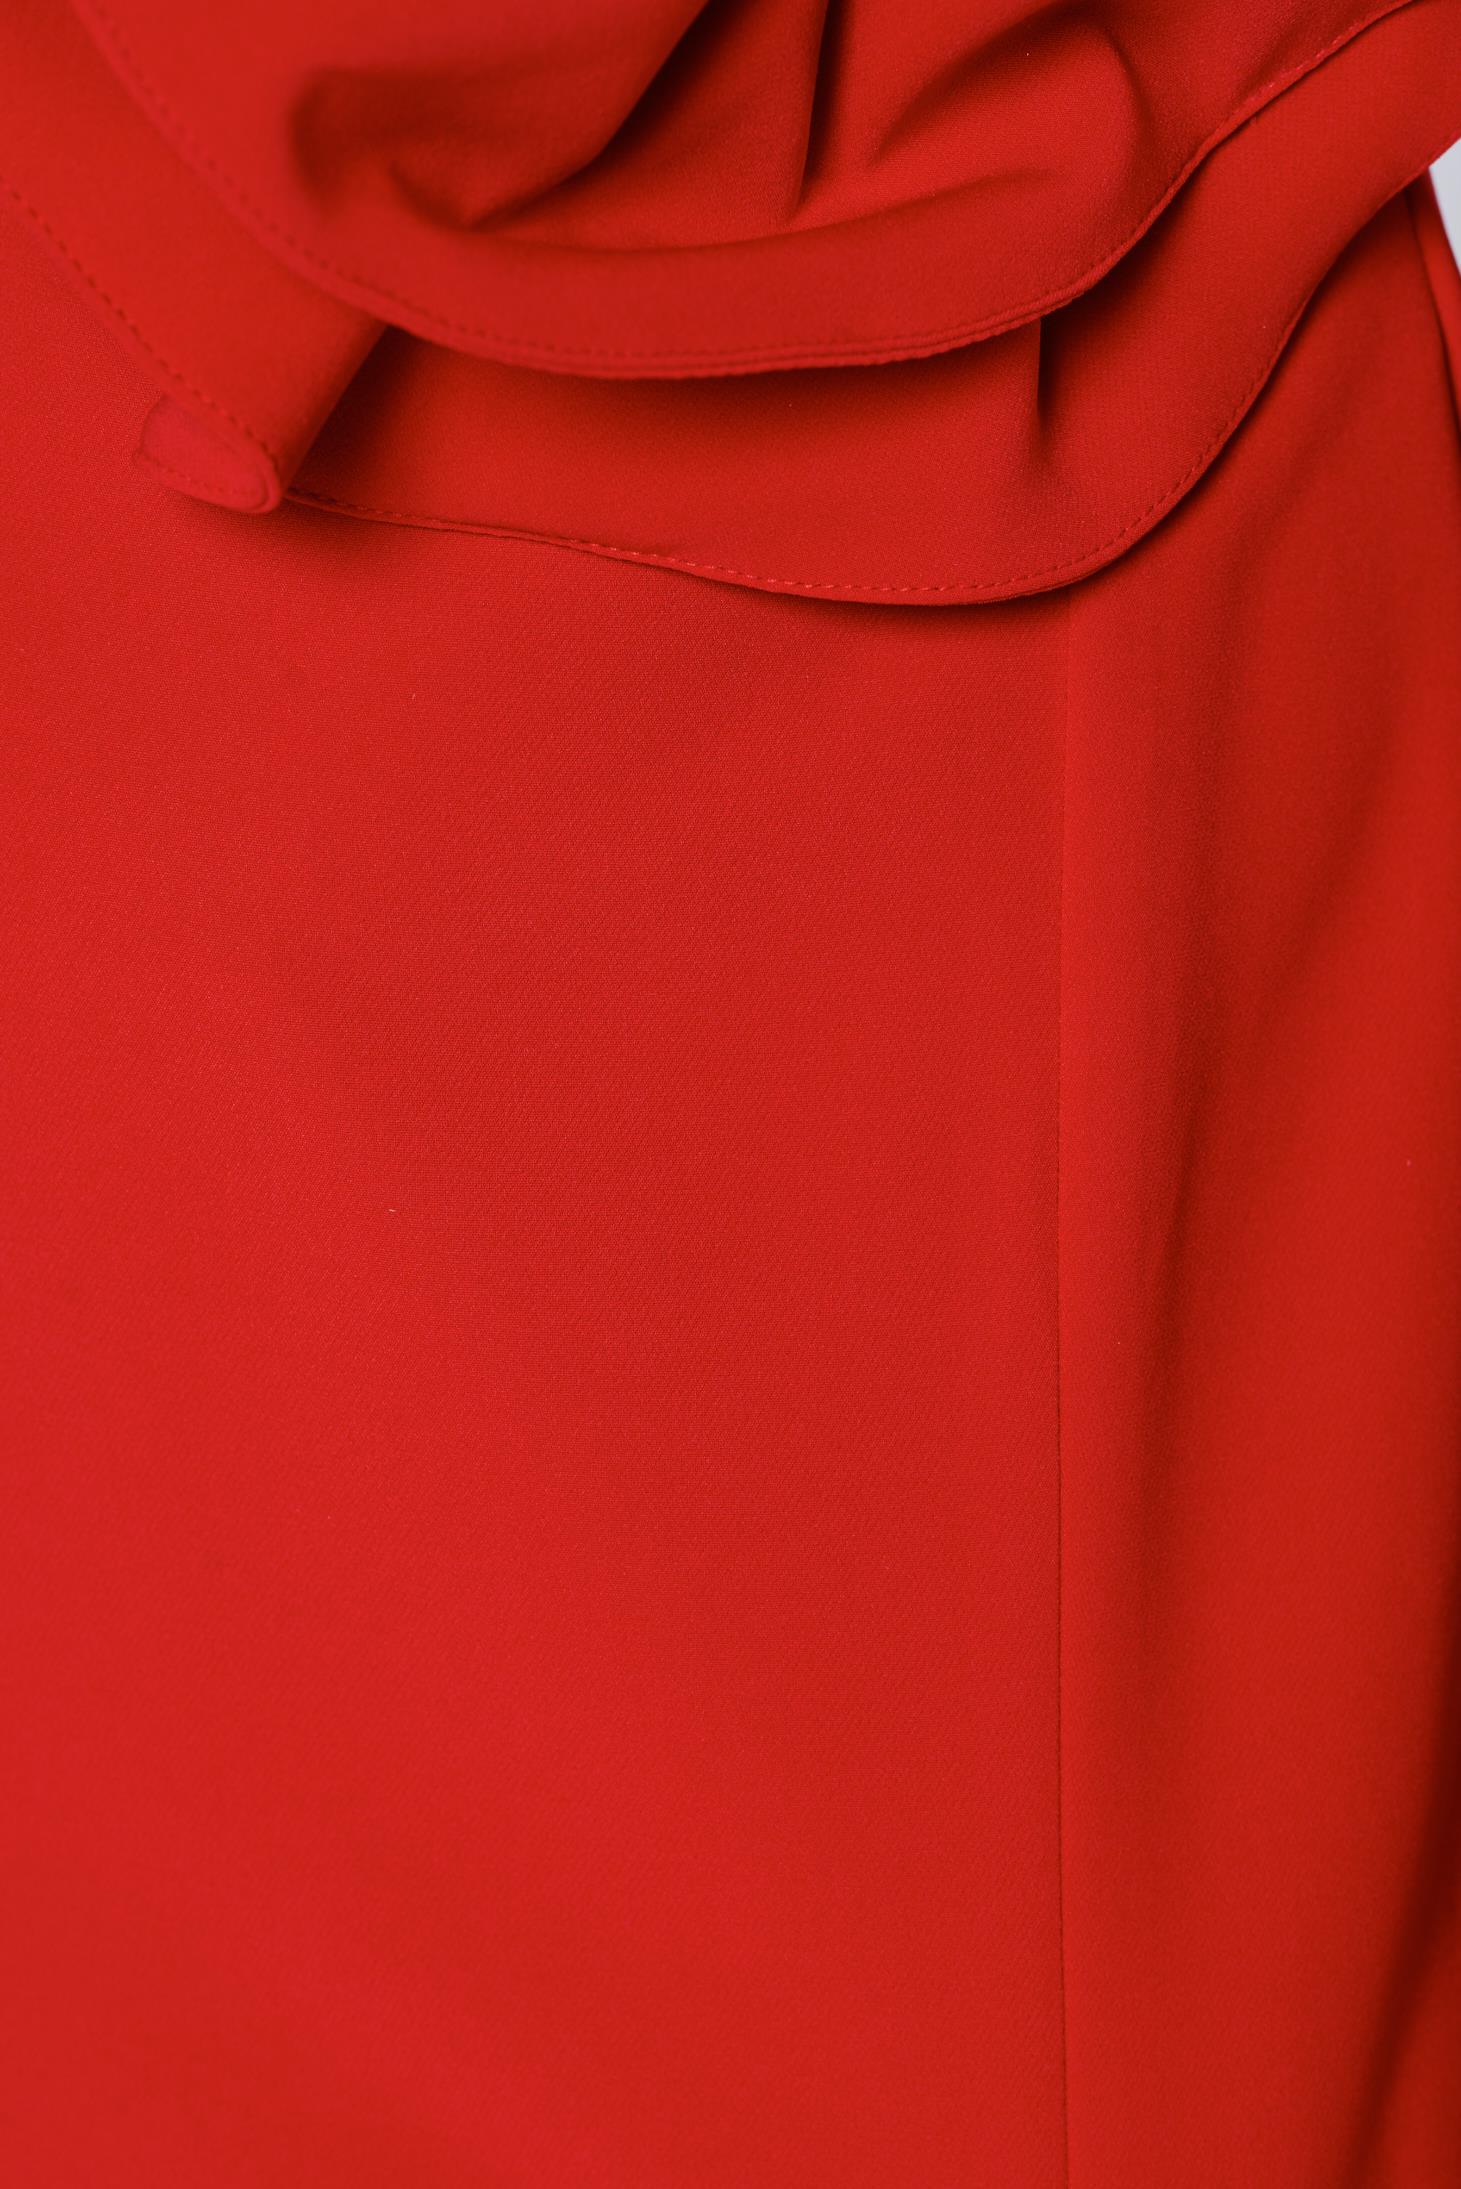 Ana Radu elegant red long sleeveless dress